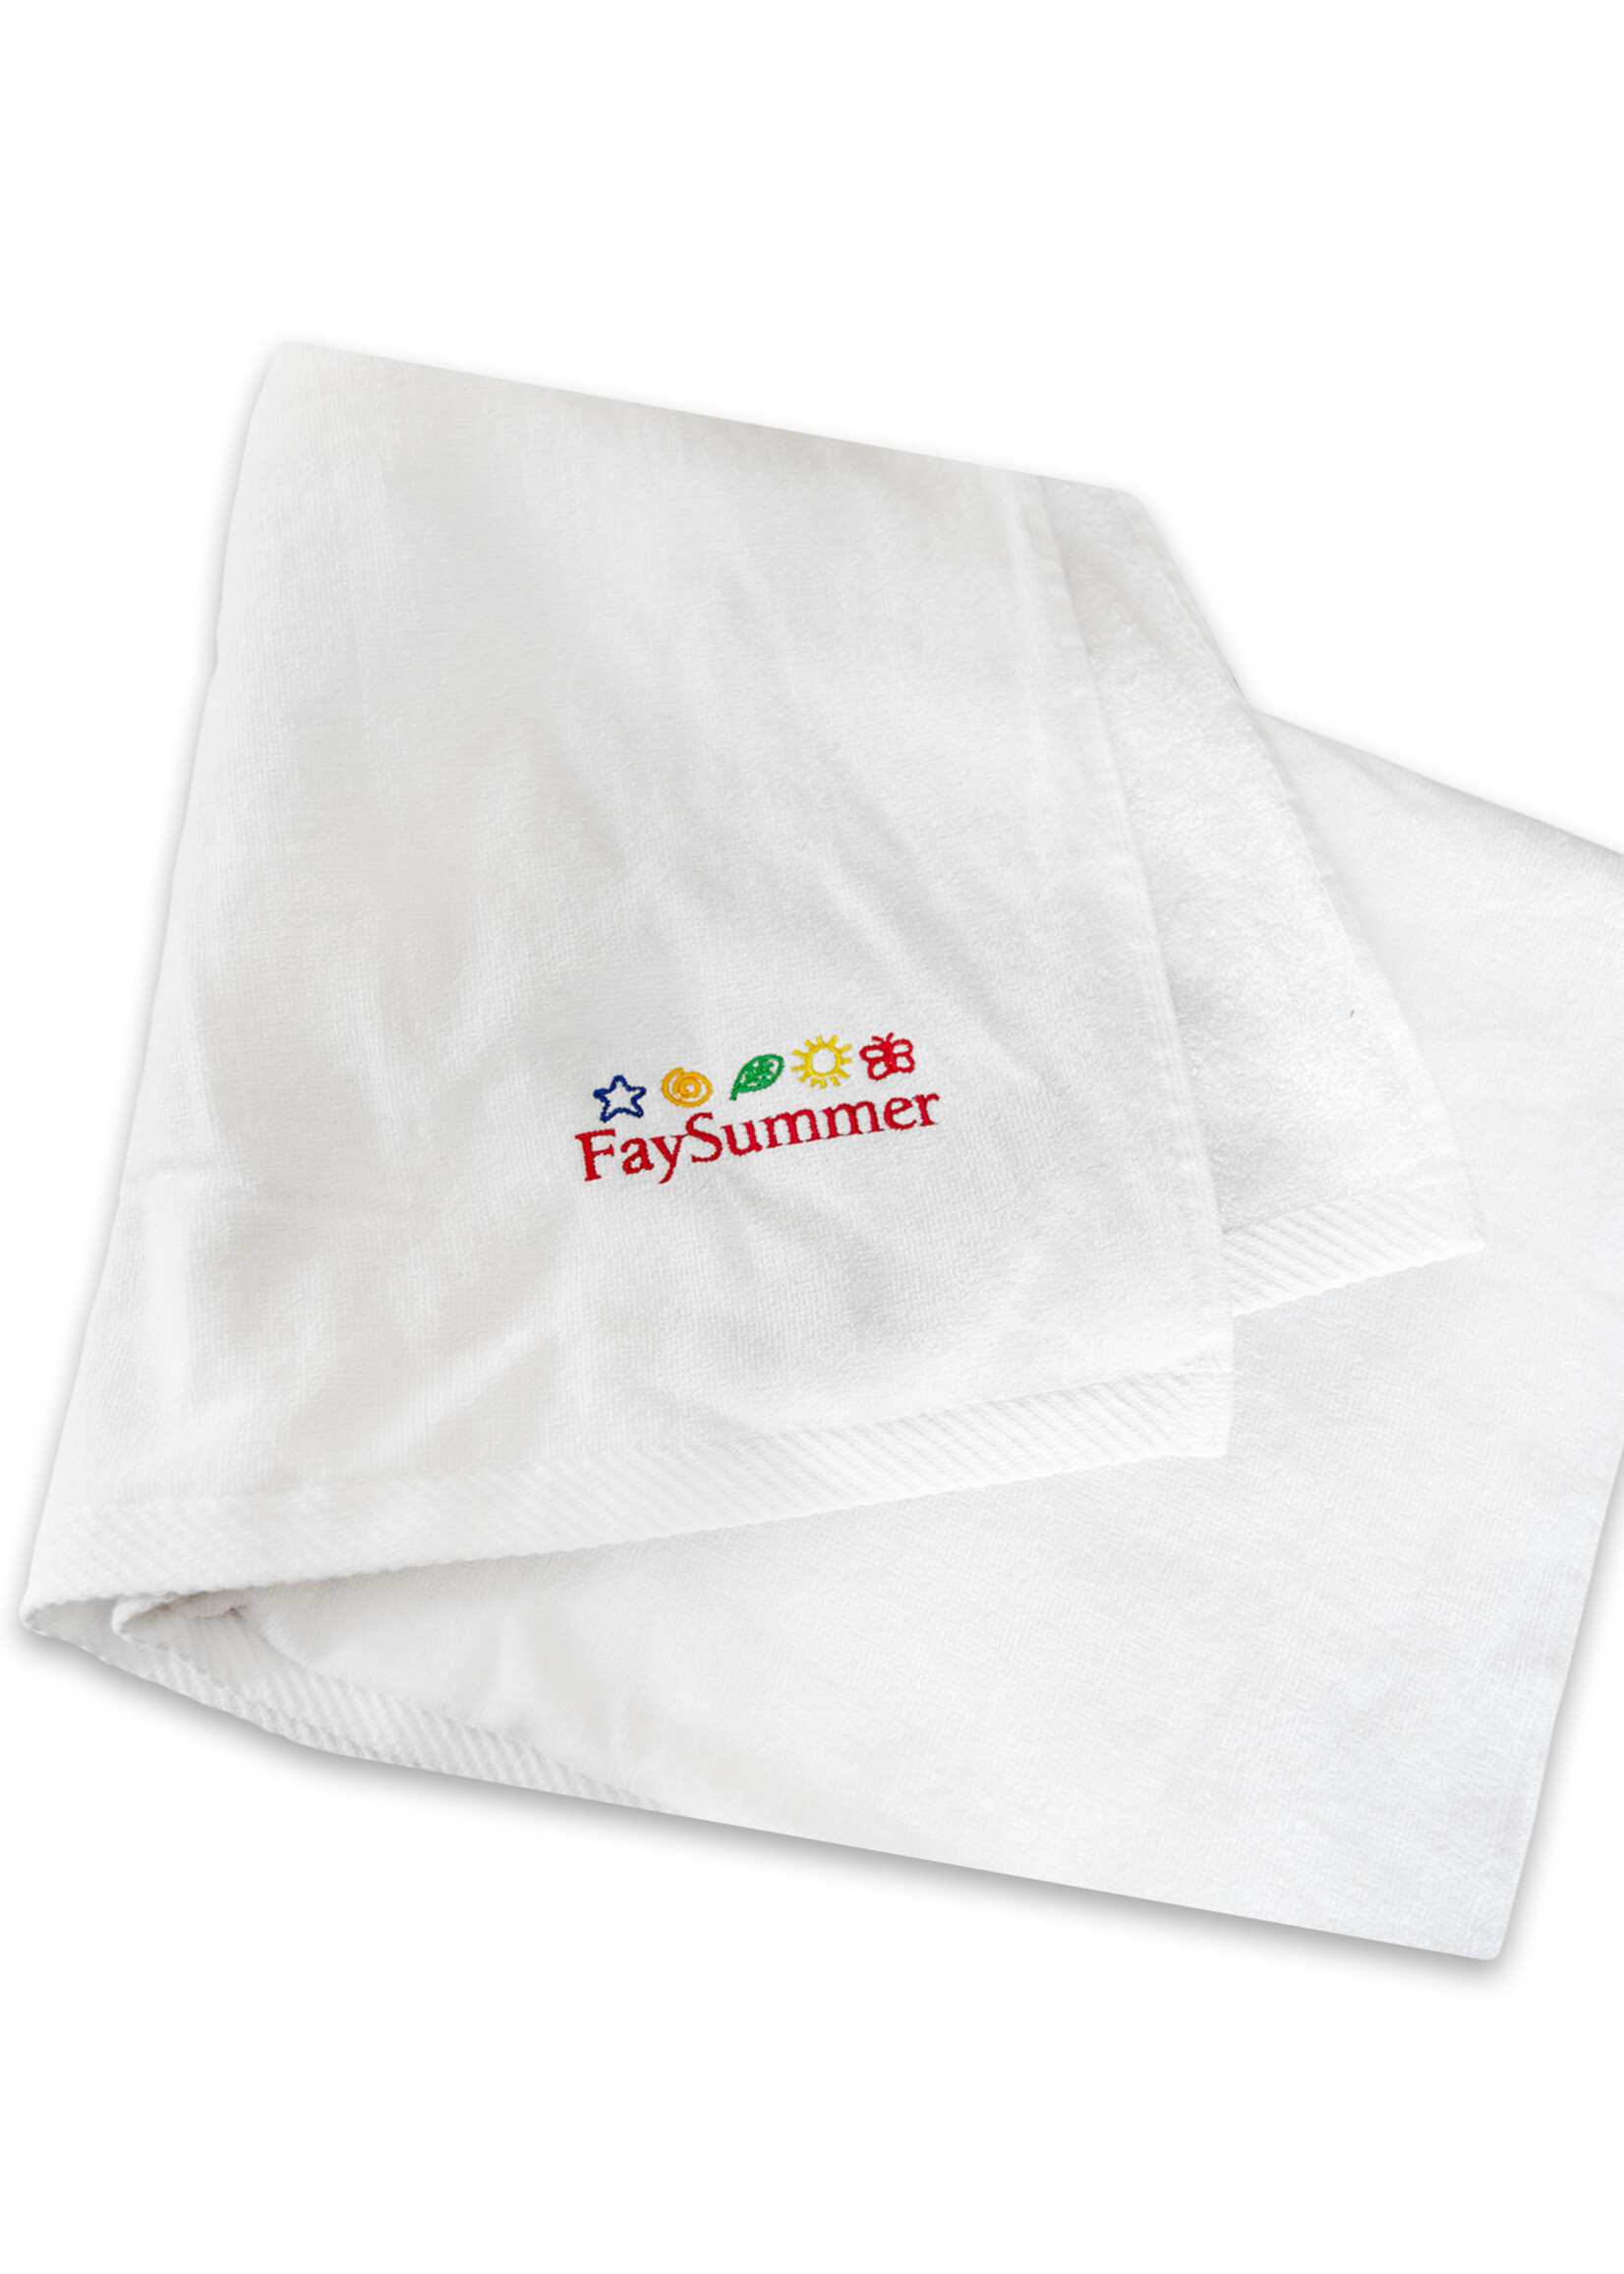 4Imprint FaySummer towel white